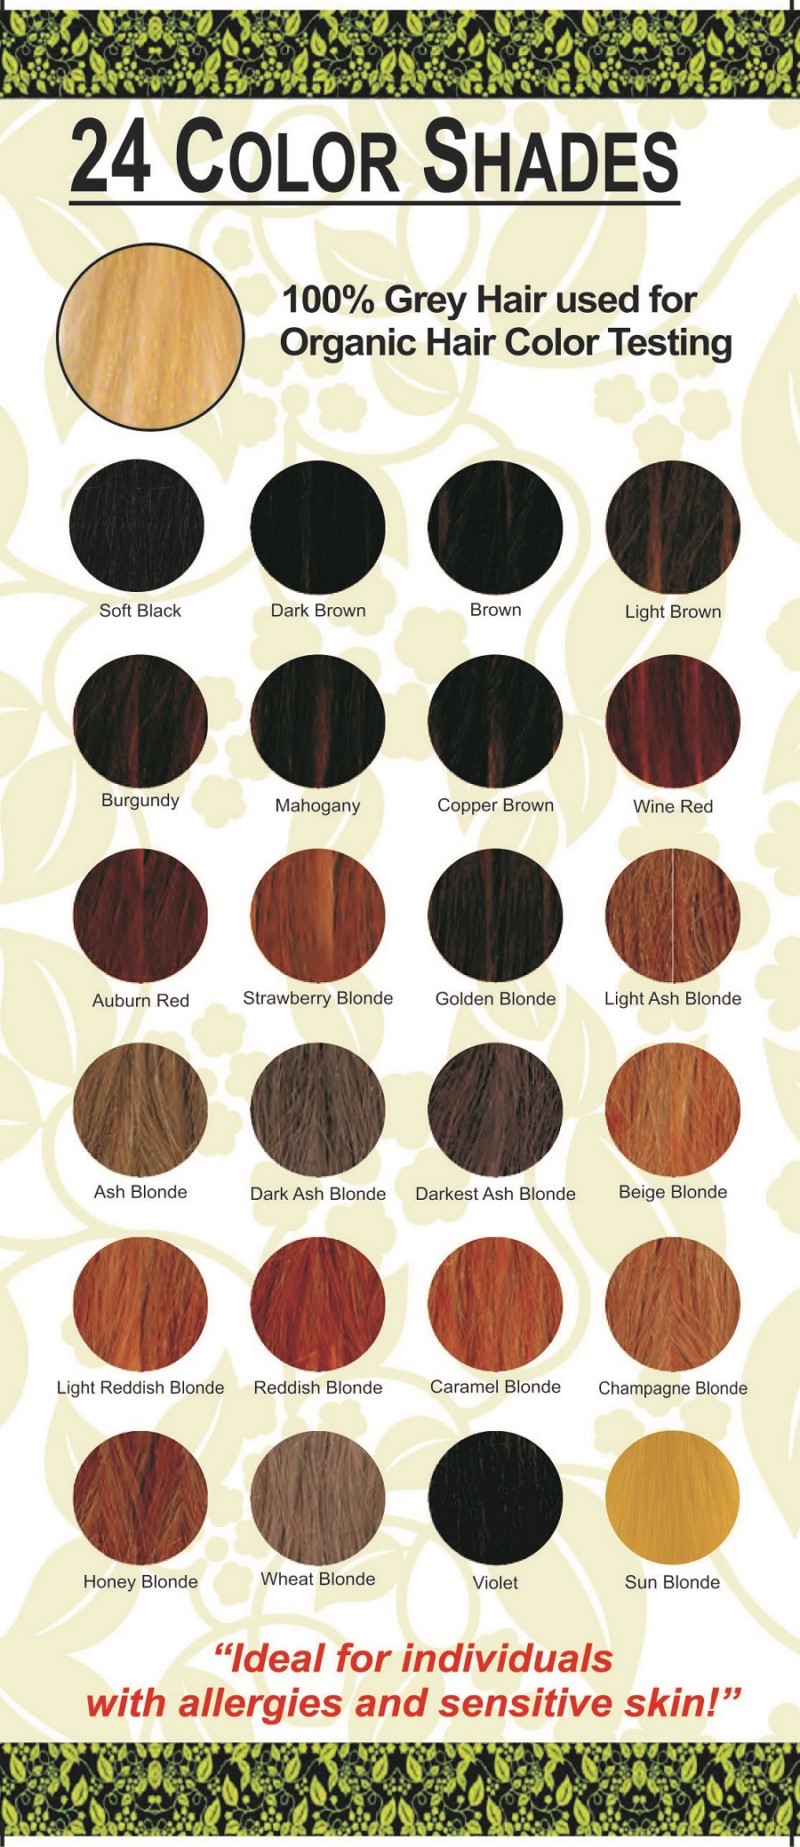 Radico + hair colour + Certified Organic Hair Color Dye -Brown Shades + Light Brown (100 gm) + discount